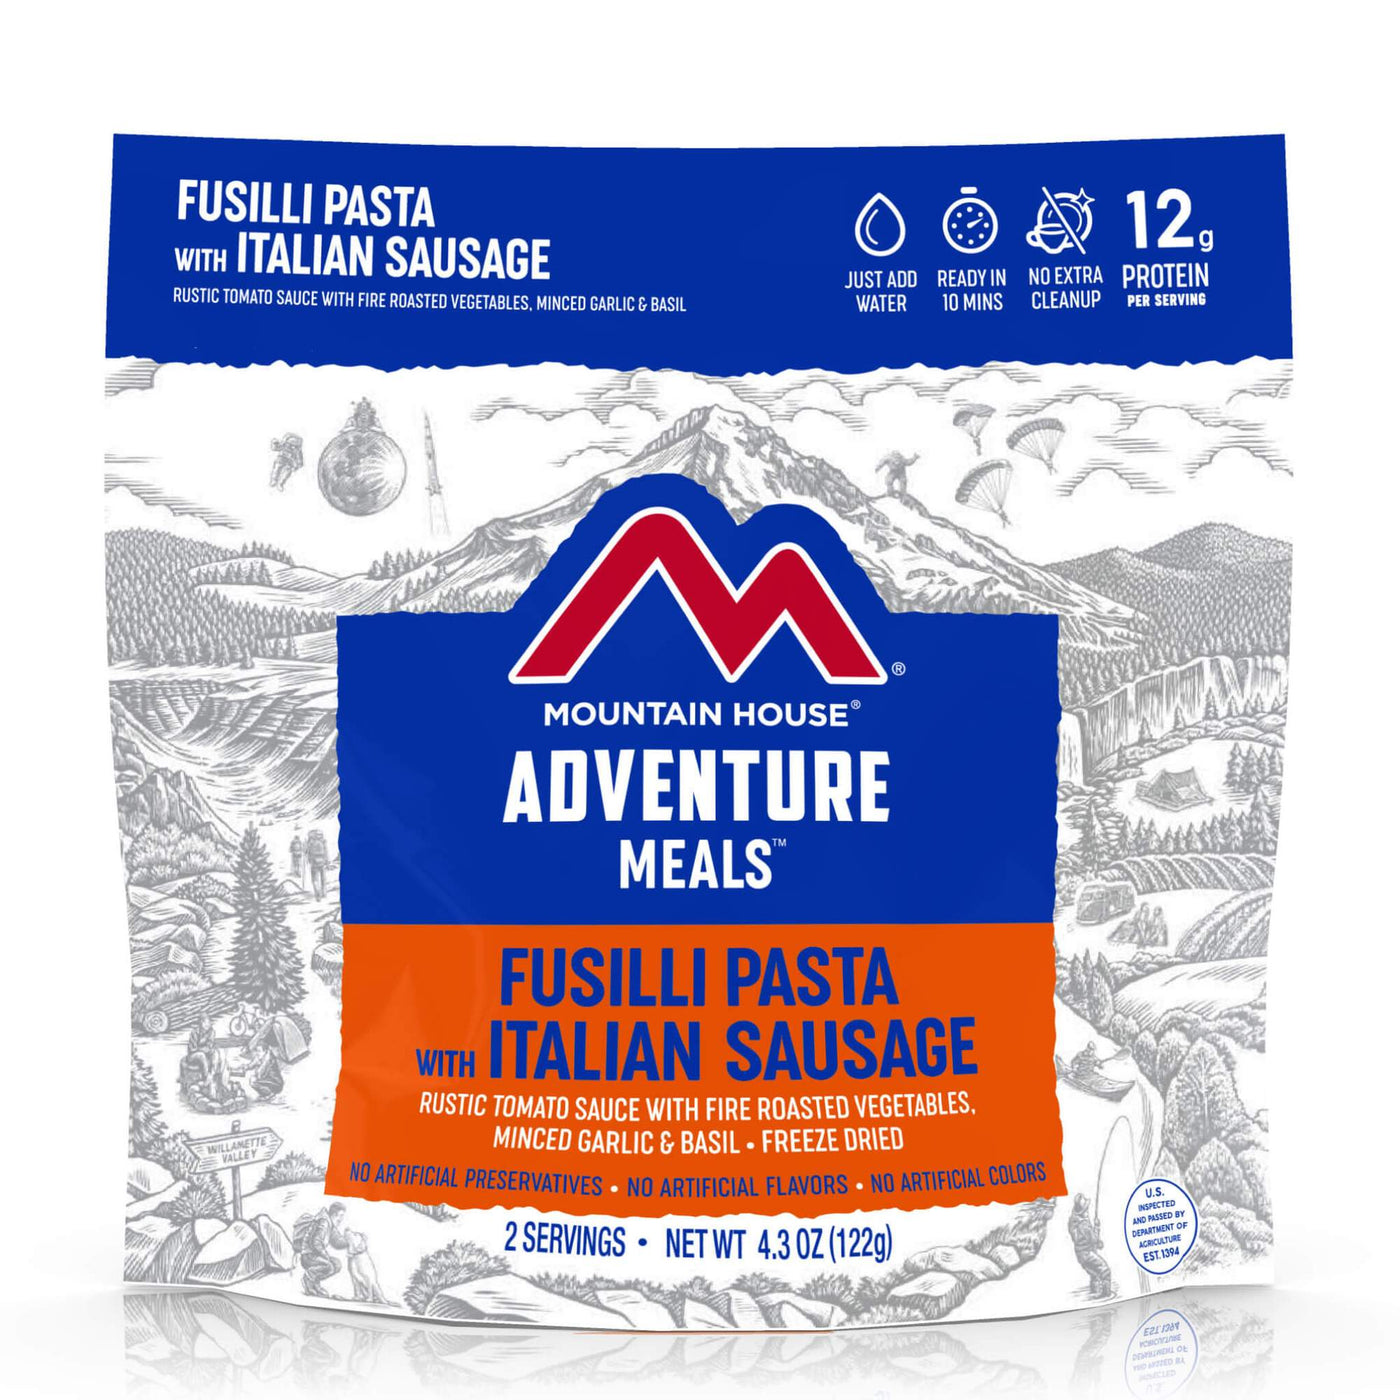 Mountain house Fusilli Pasta with Italian Sausage meal